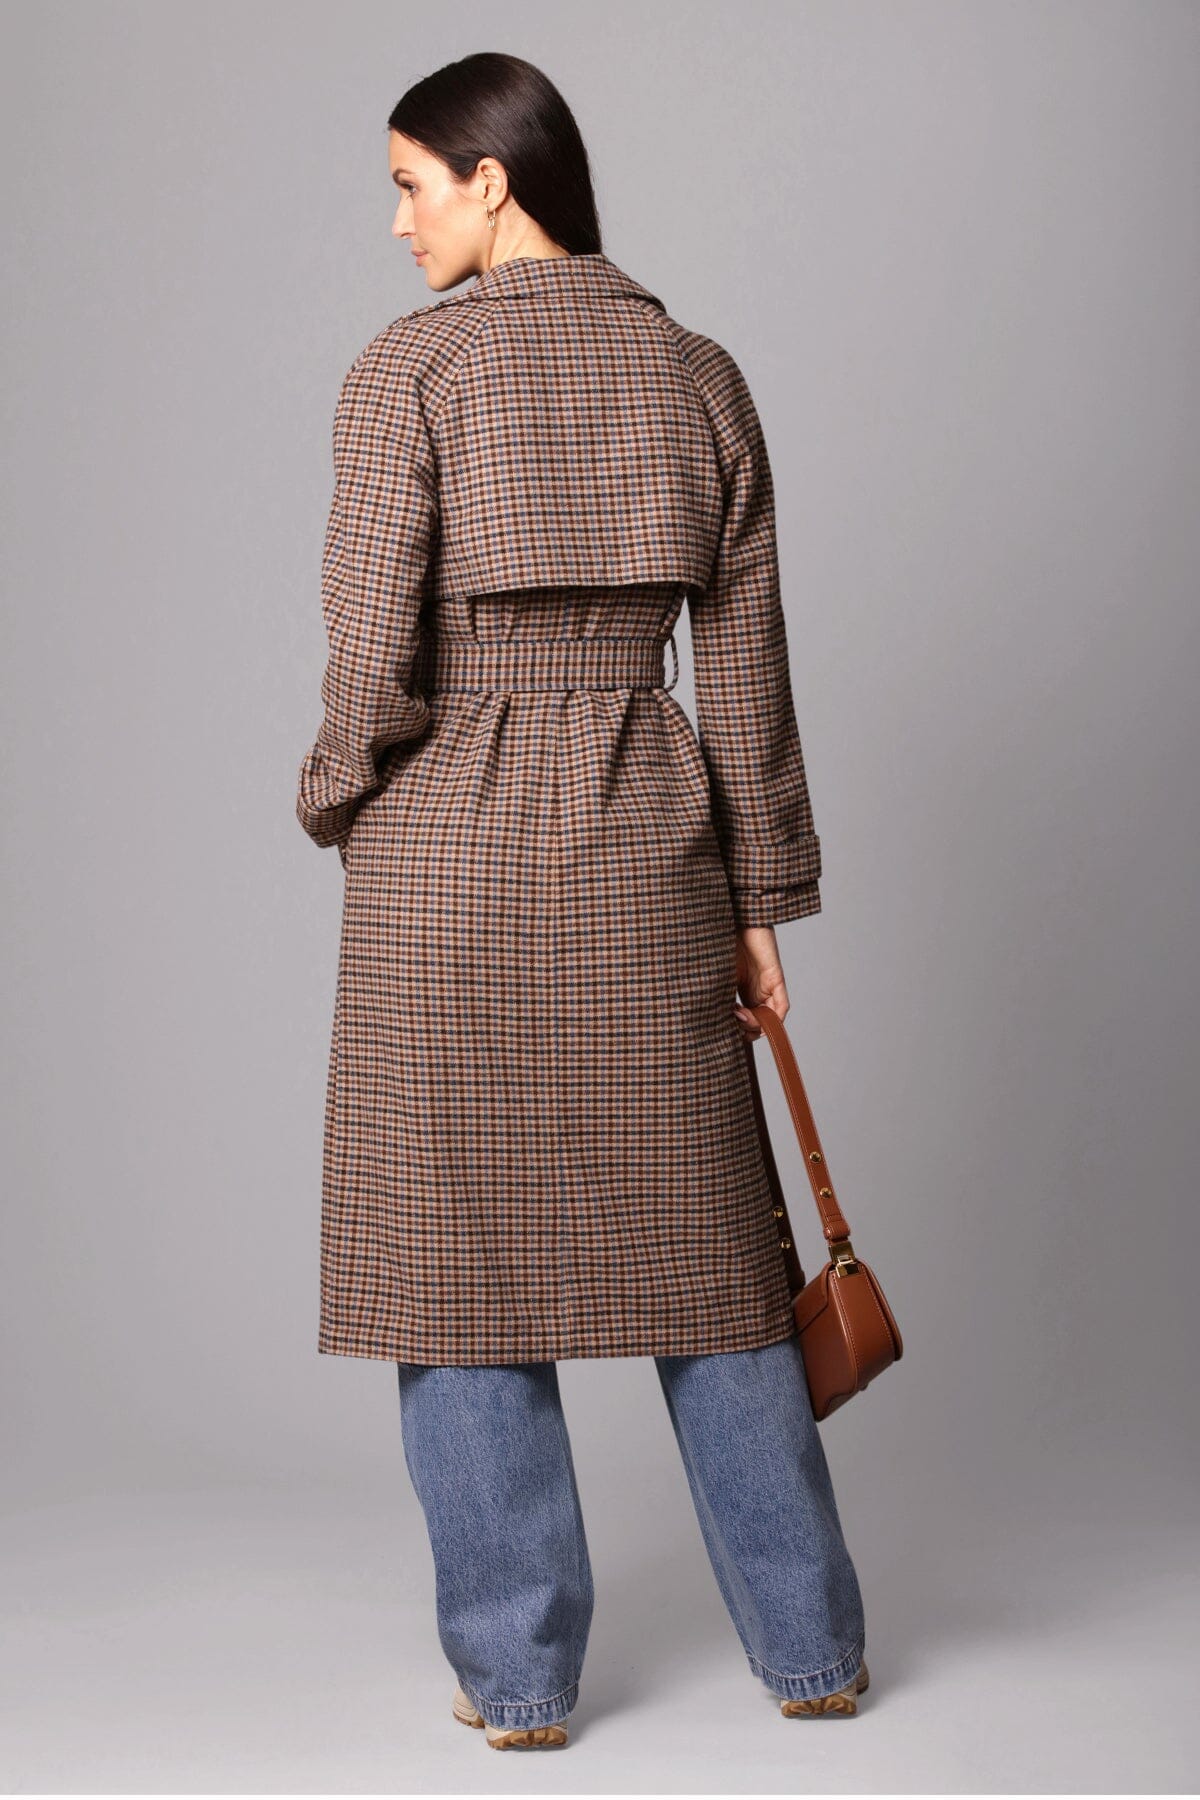 open front drape trench coat brown blue plaid outerwear - women's flattering designer fashion coats 